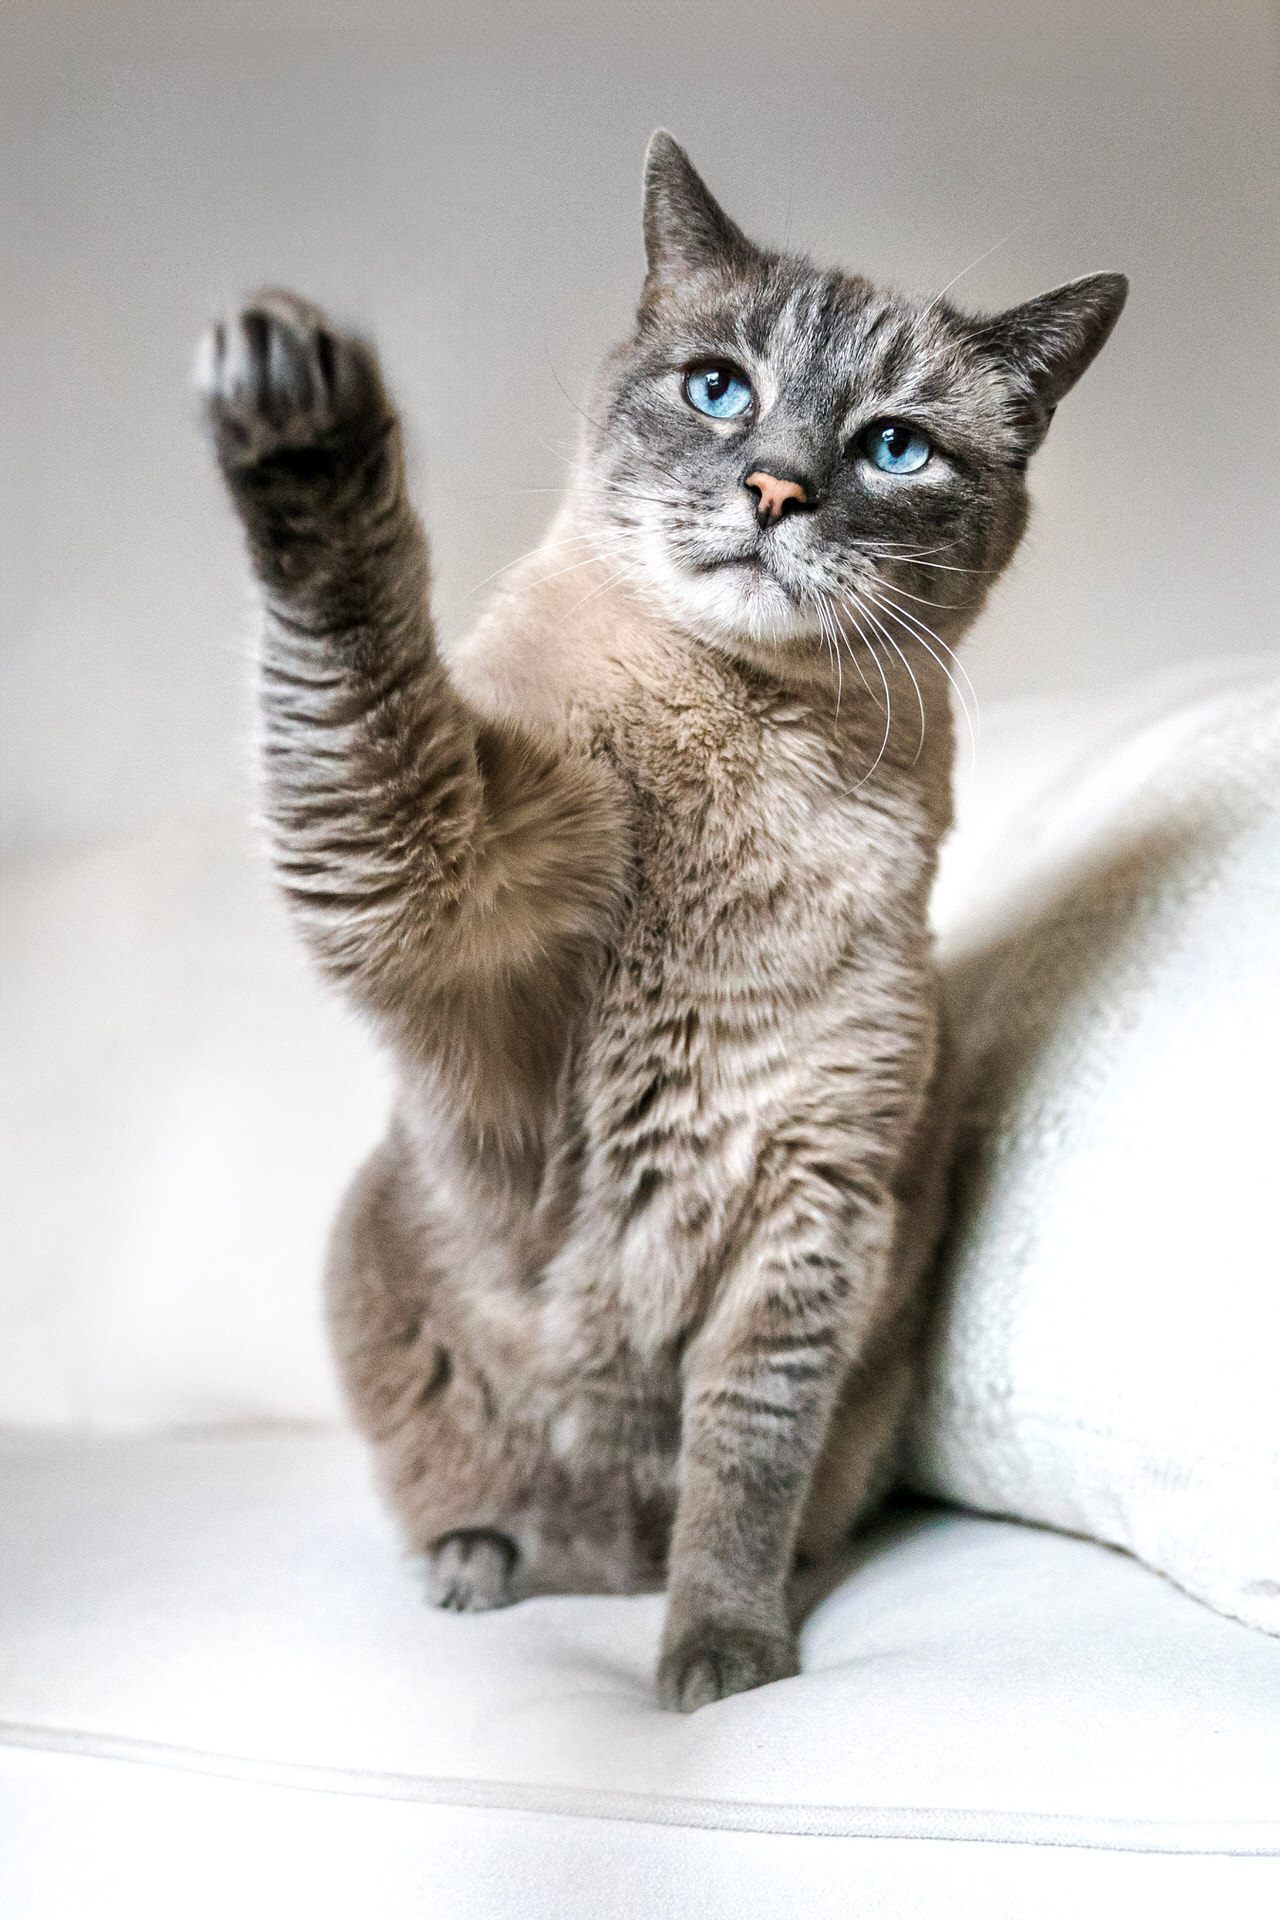 Gray cat with blue eyes raising paw